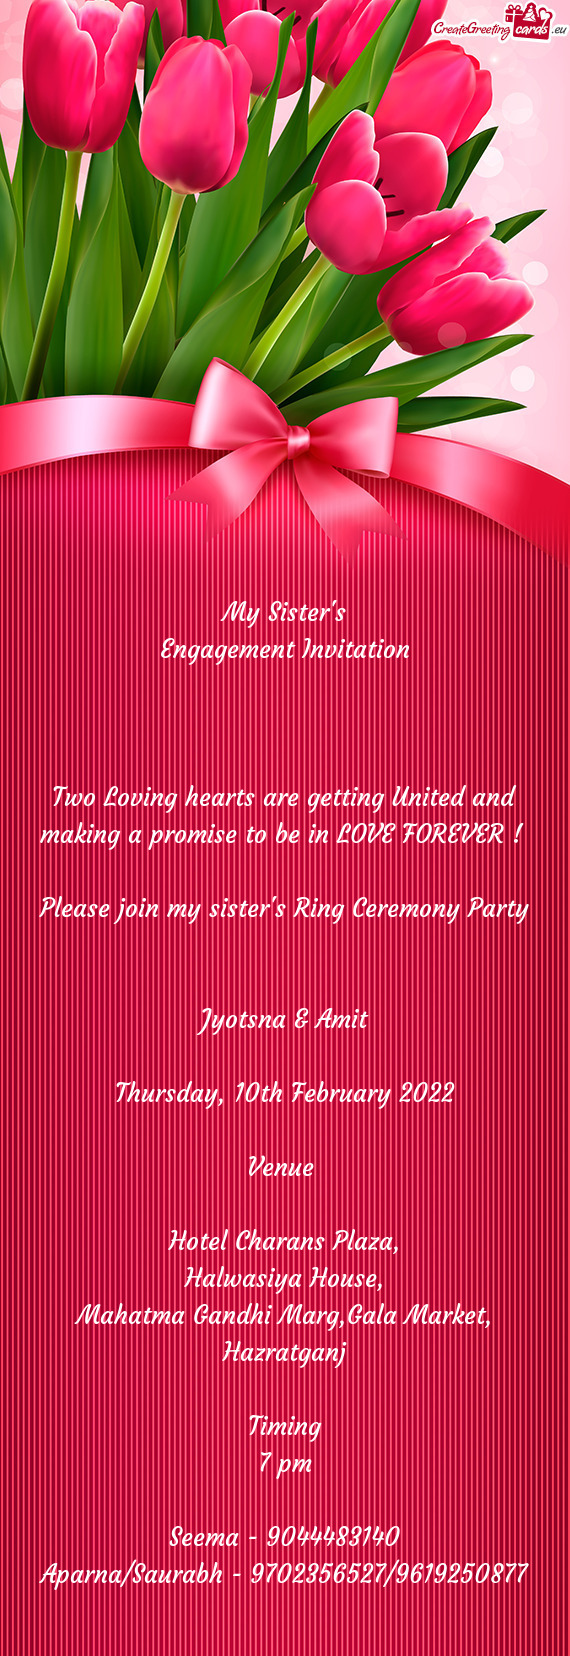 Thursday, 10th February 2022